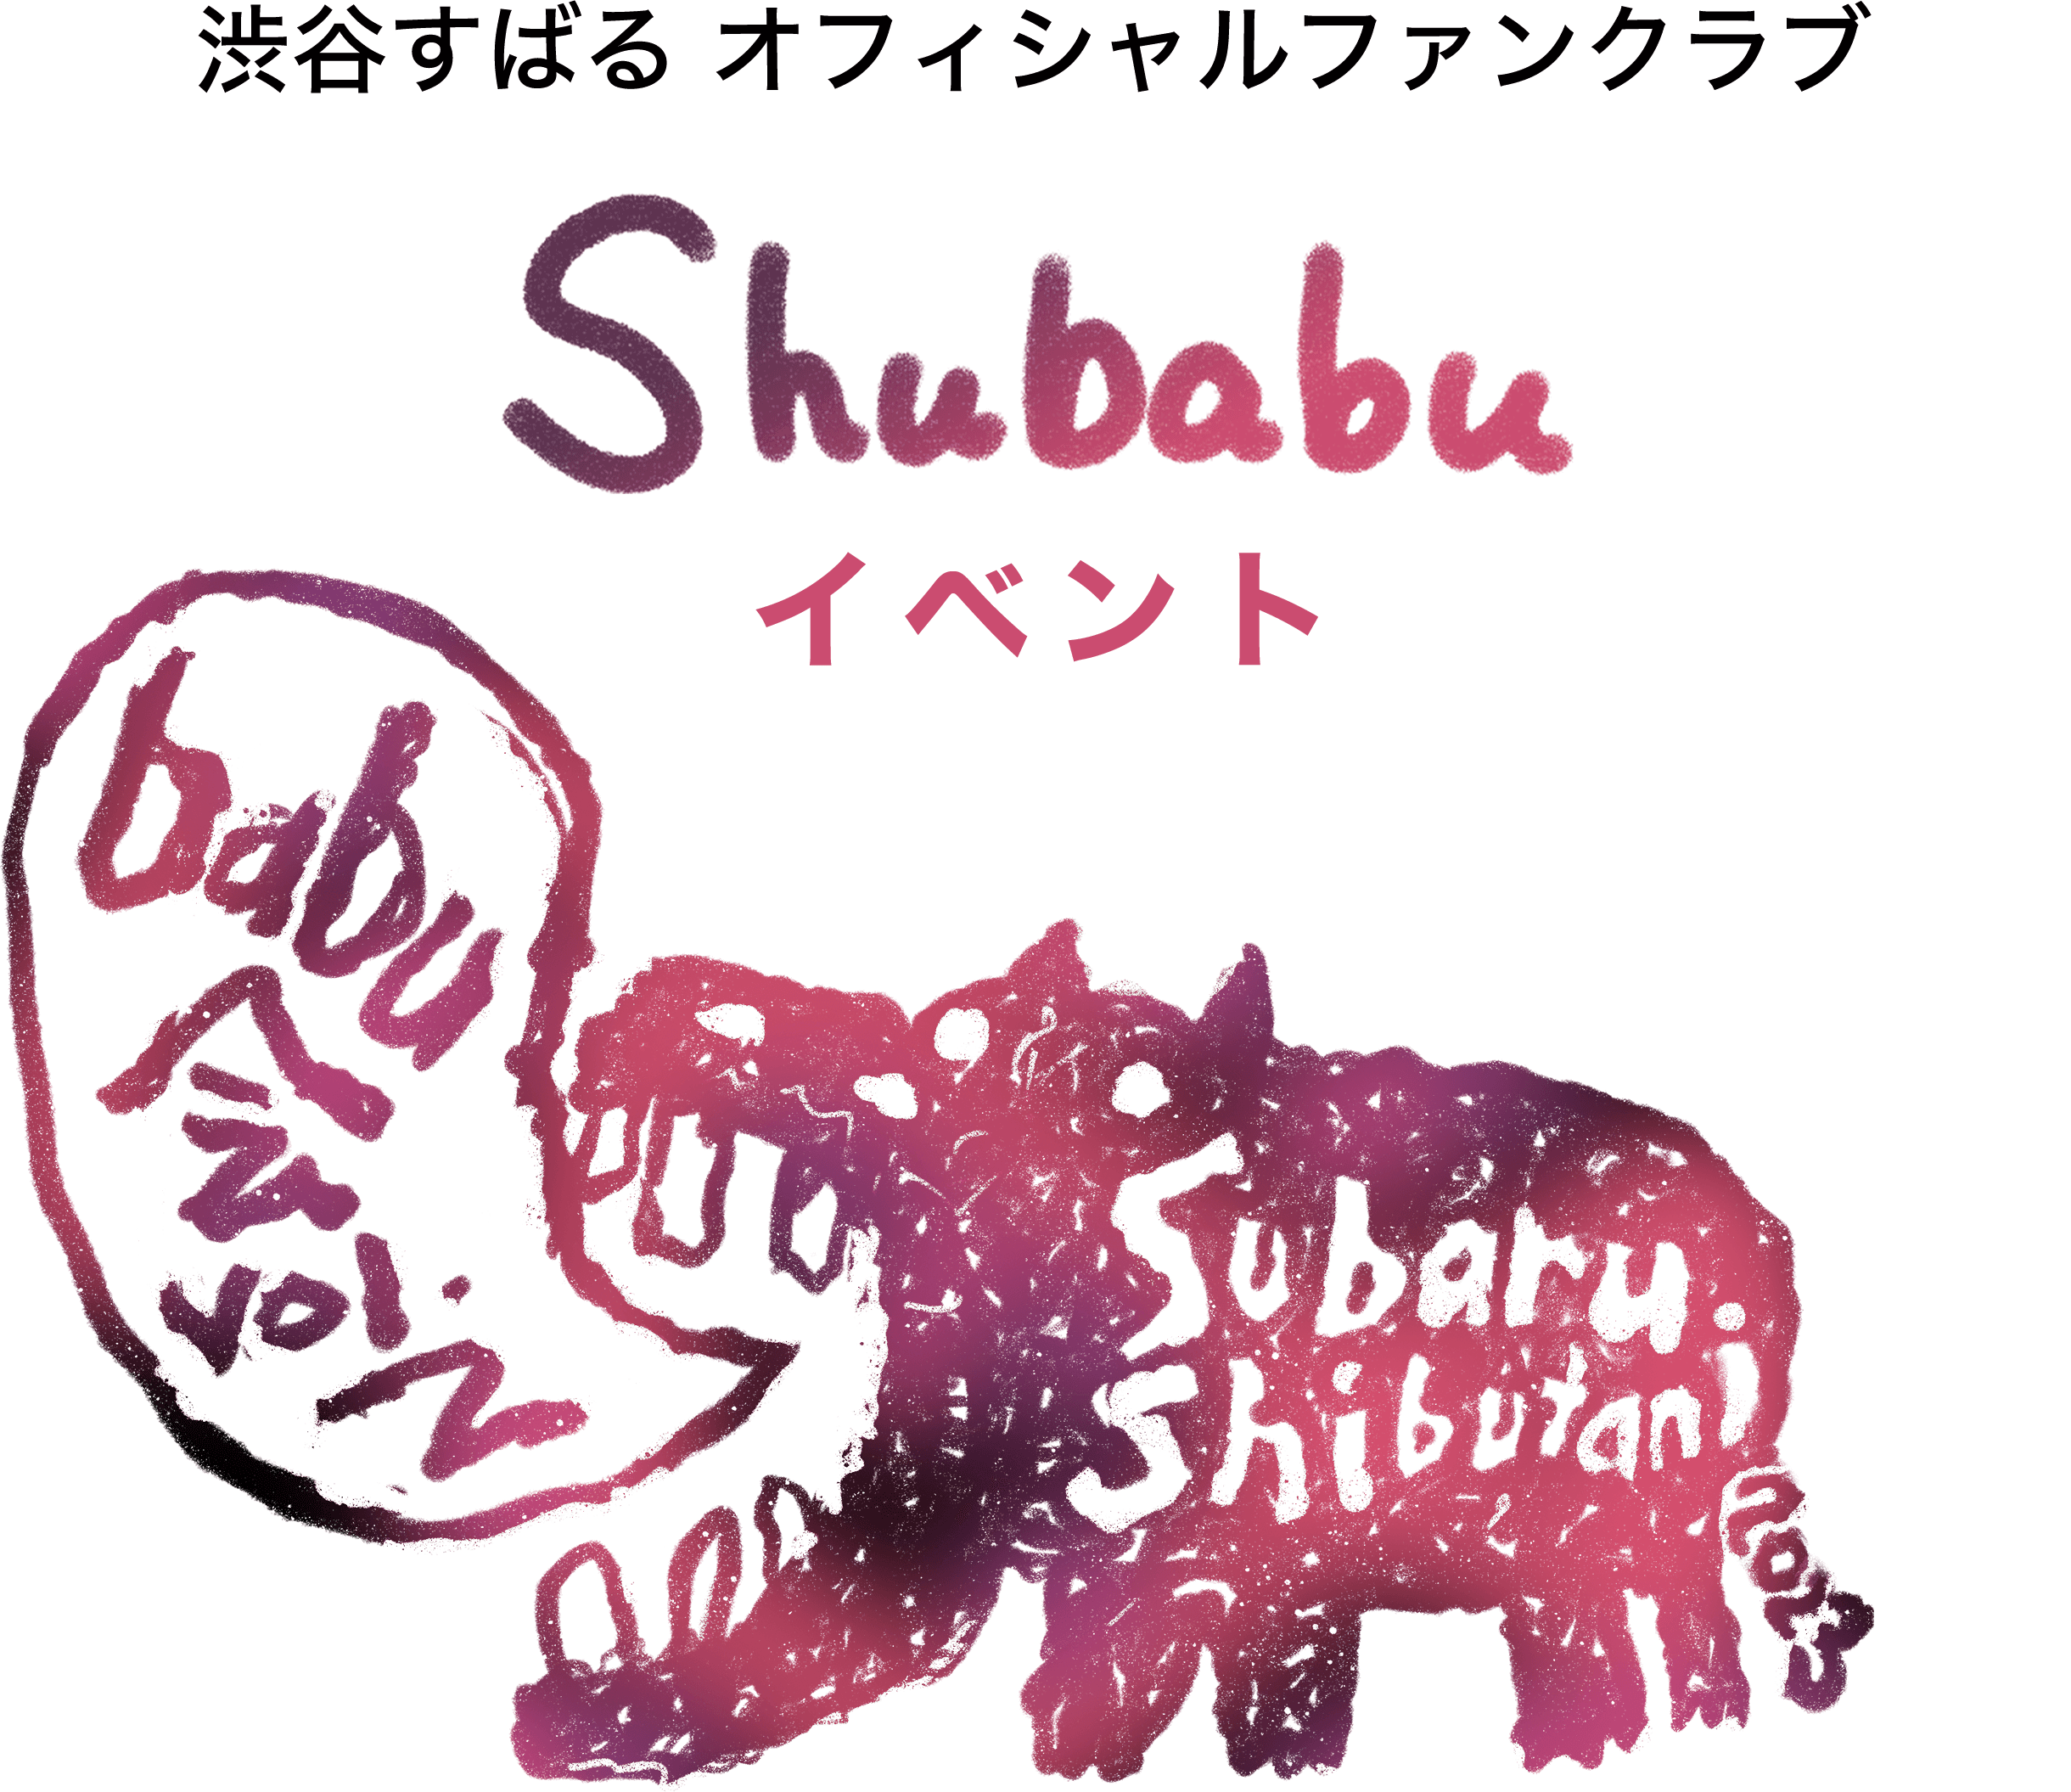 Shubabu会員限定イベント babu会 vol.2 開催決定